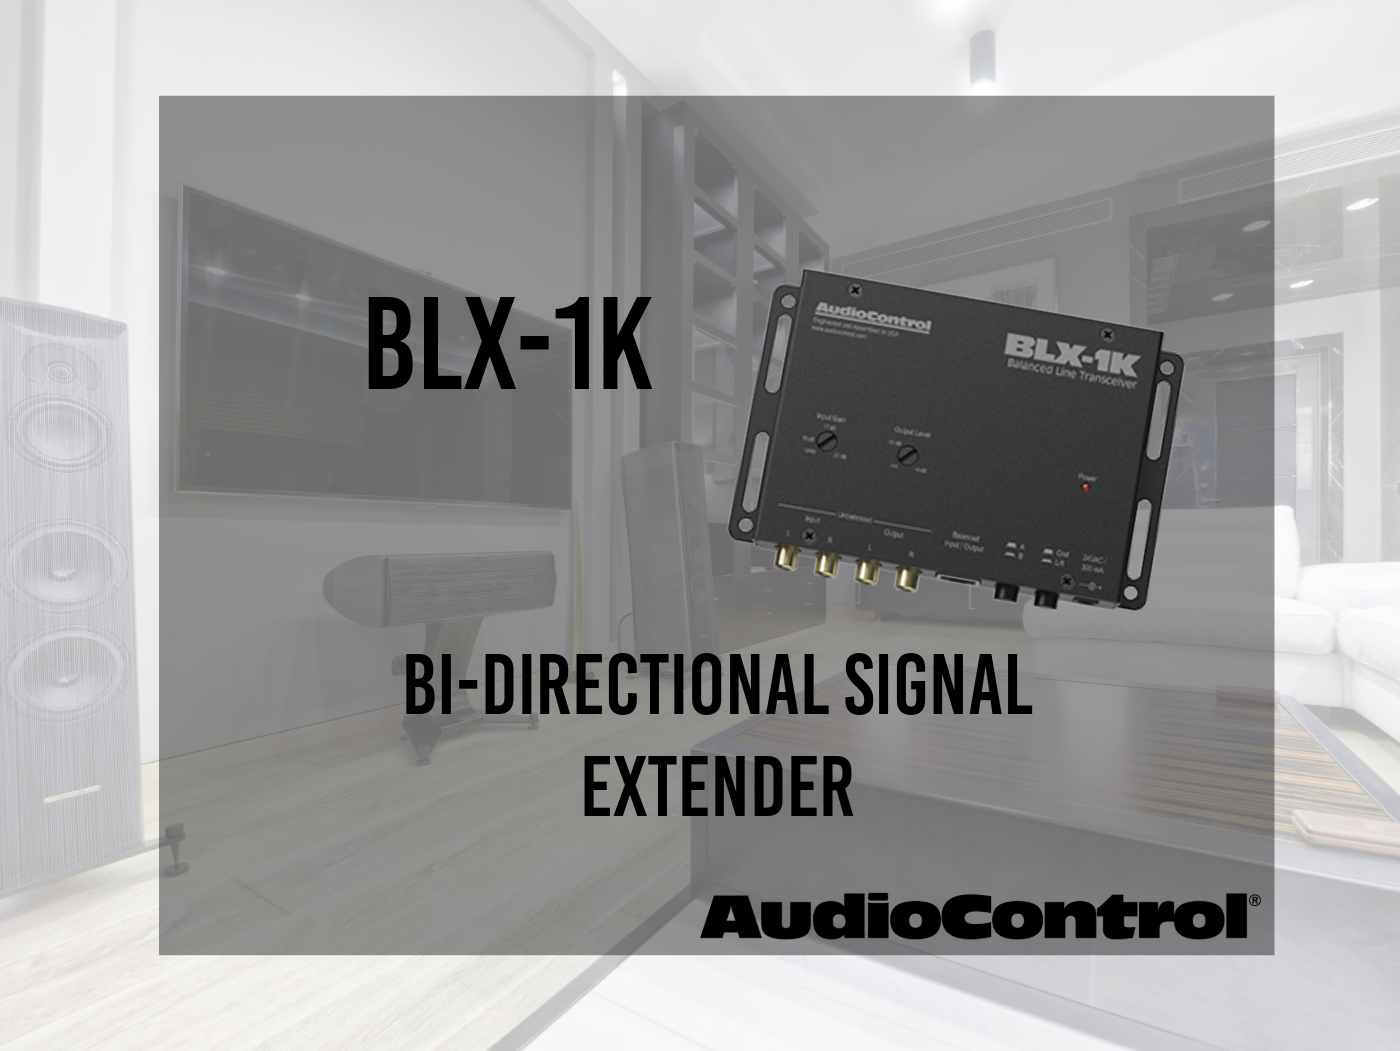 AudioControl Introduces the BLX-1K Bi-Directional Signal Extender